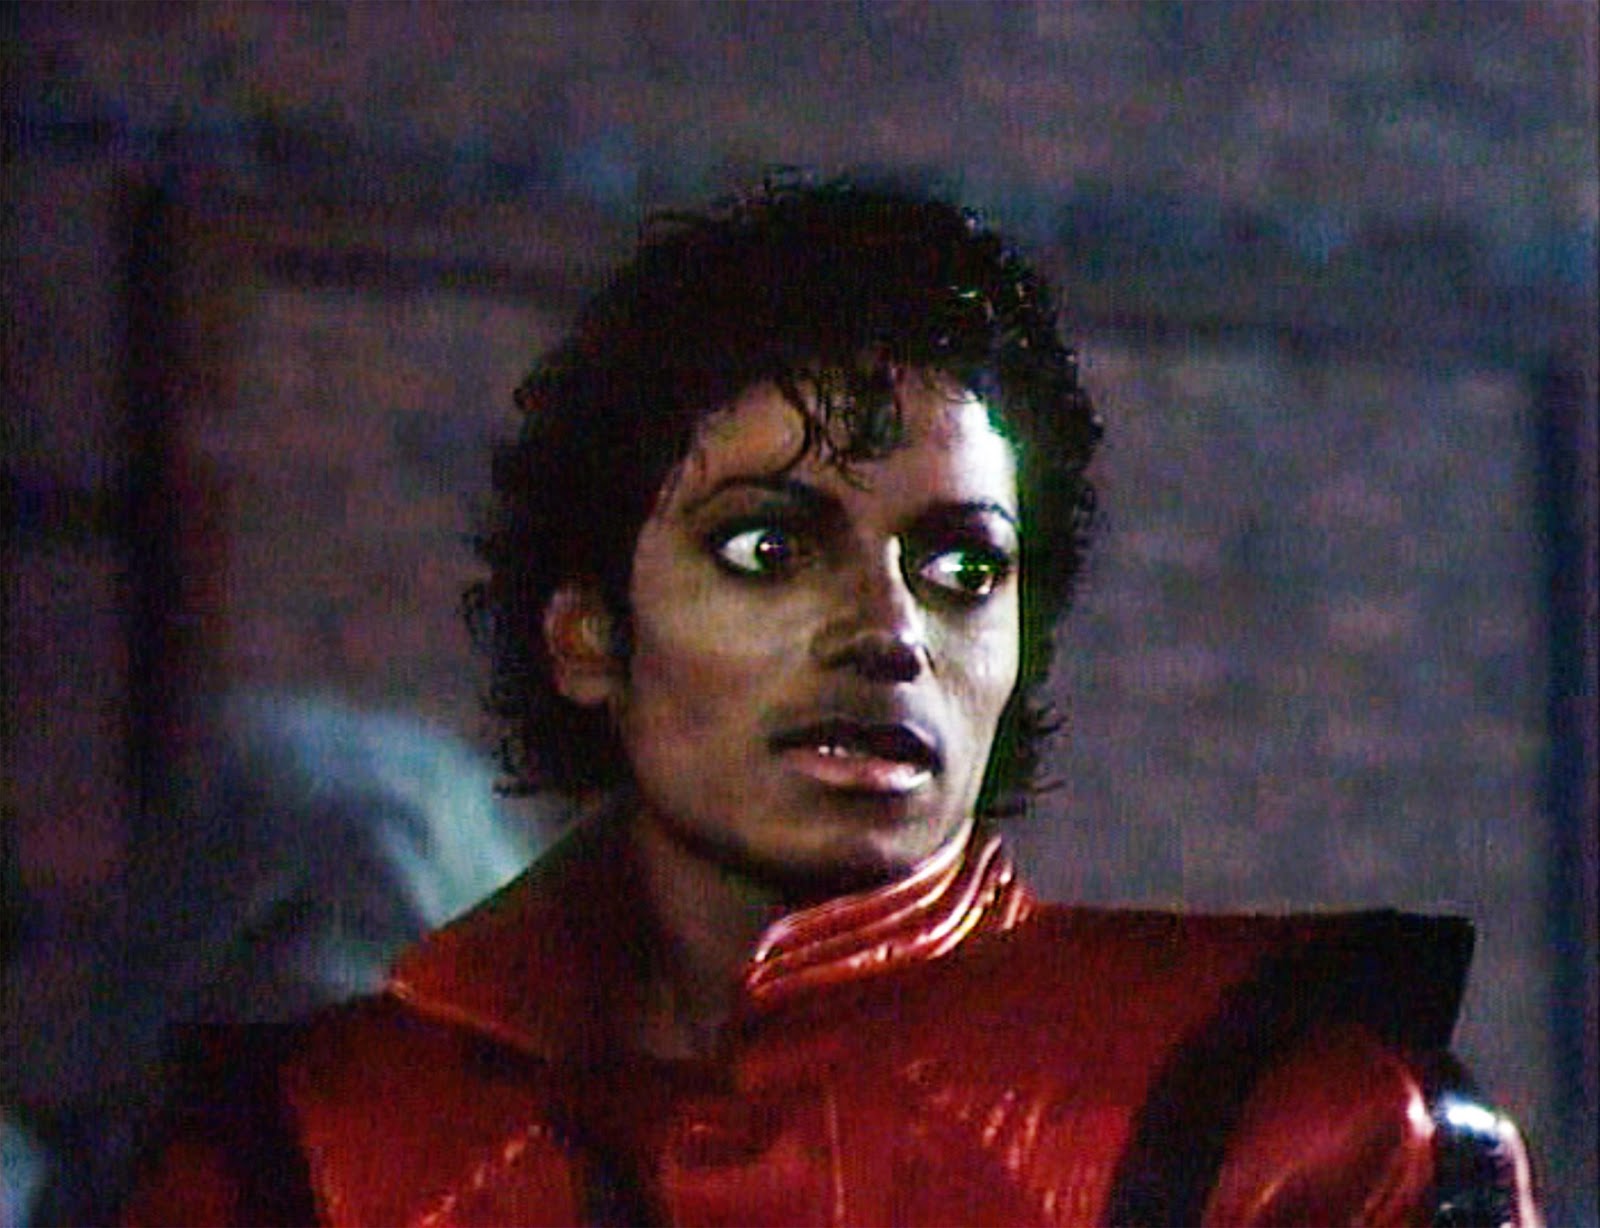 [76+] Michael Jackson Thriller Wallpaper on WallpaperSafari